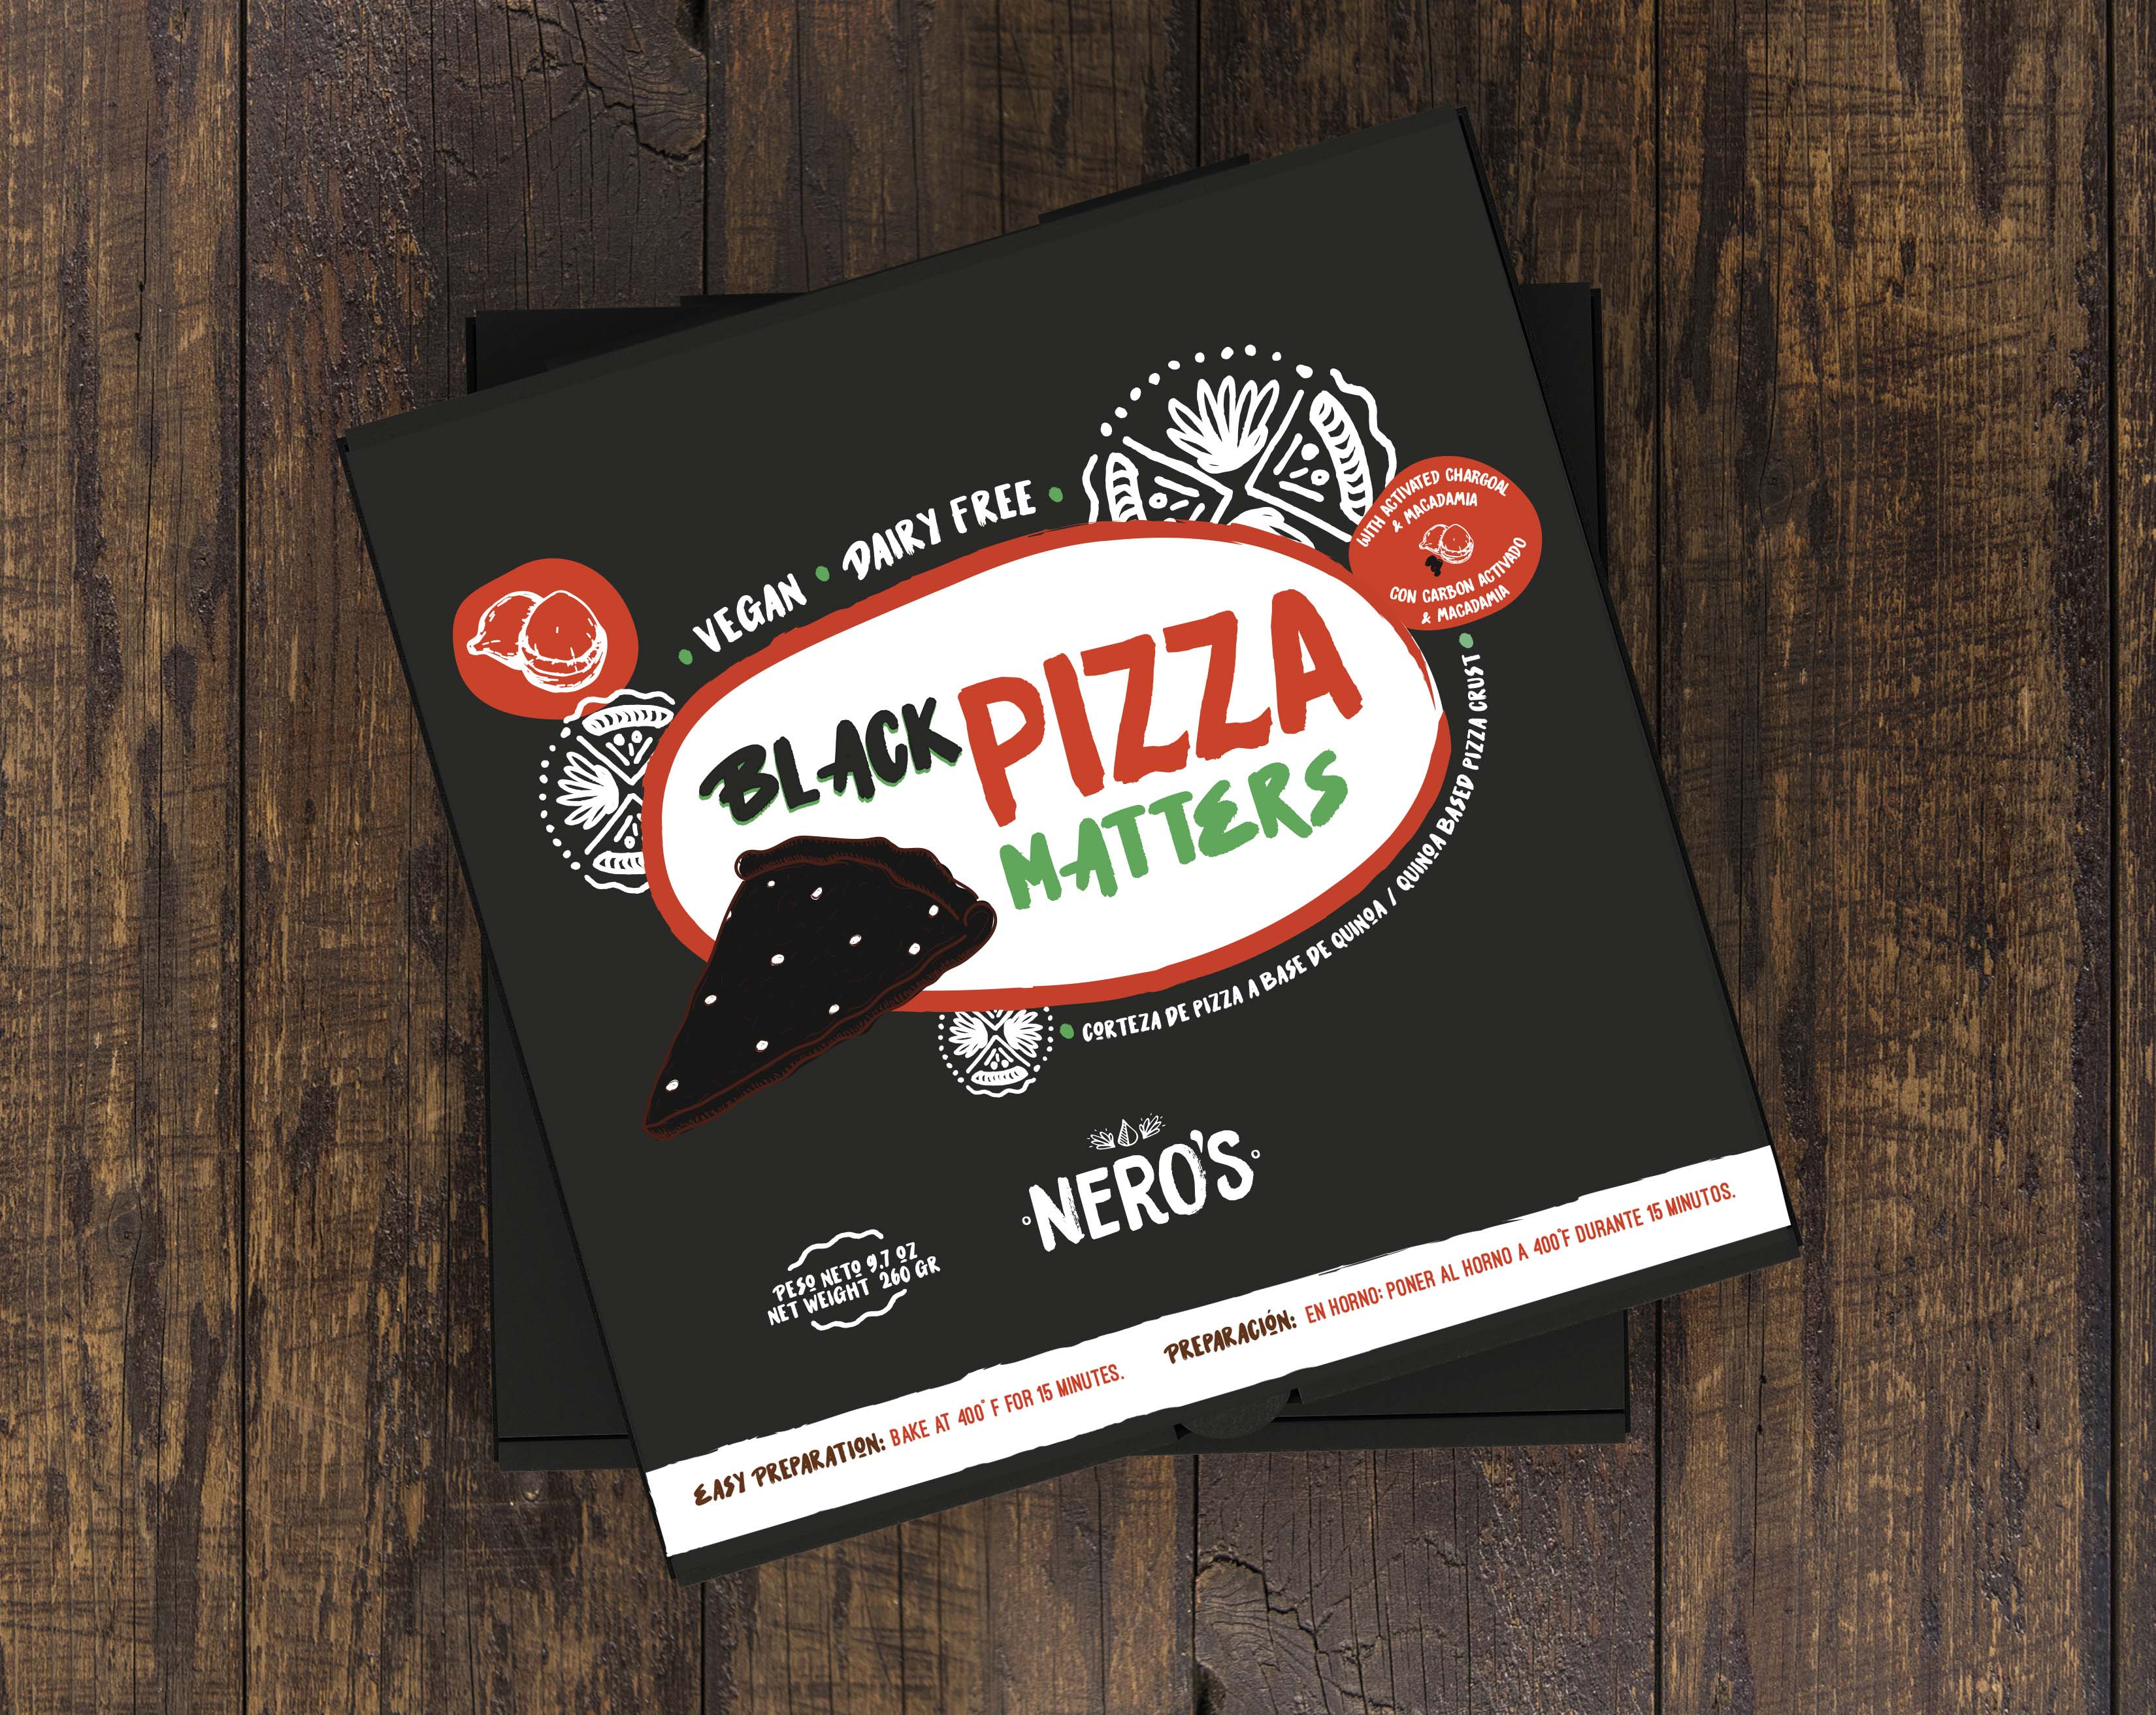 Black Pizza Matters